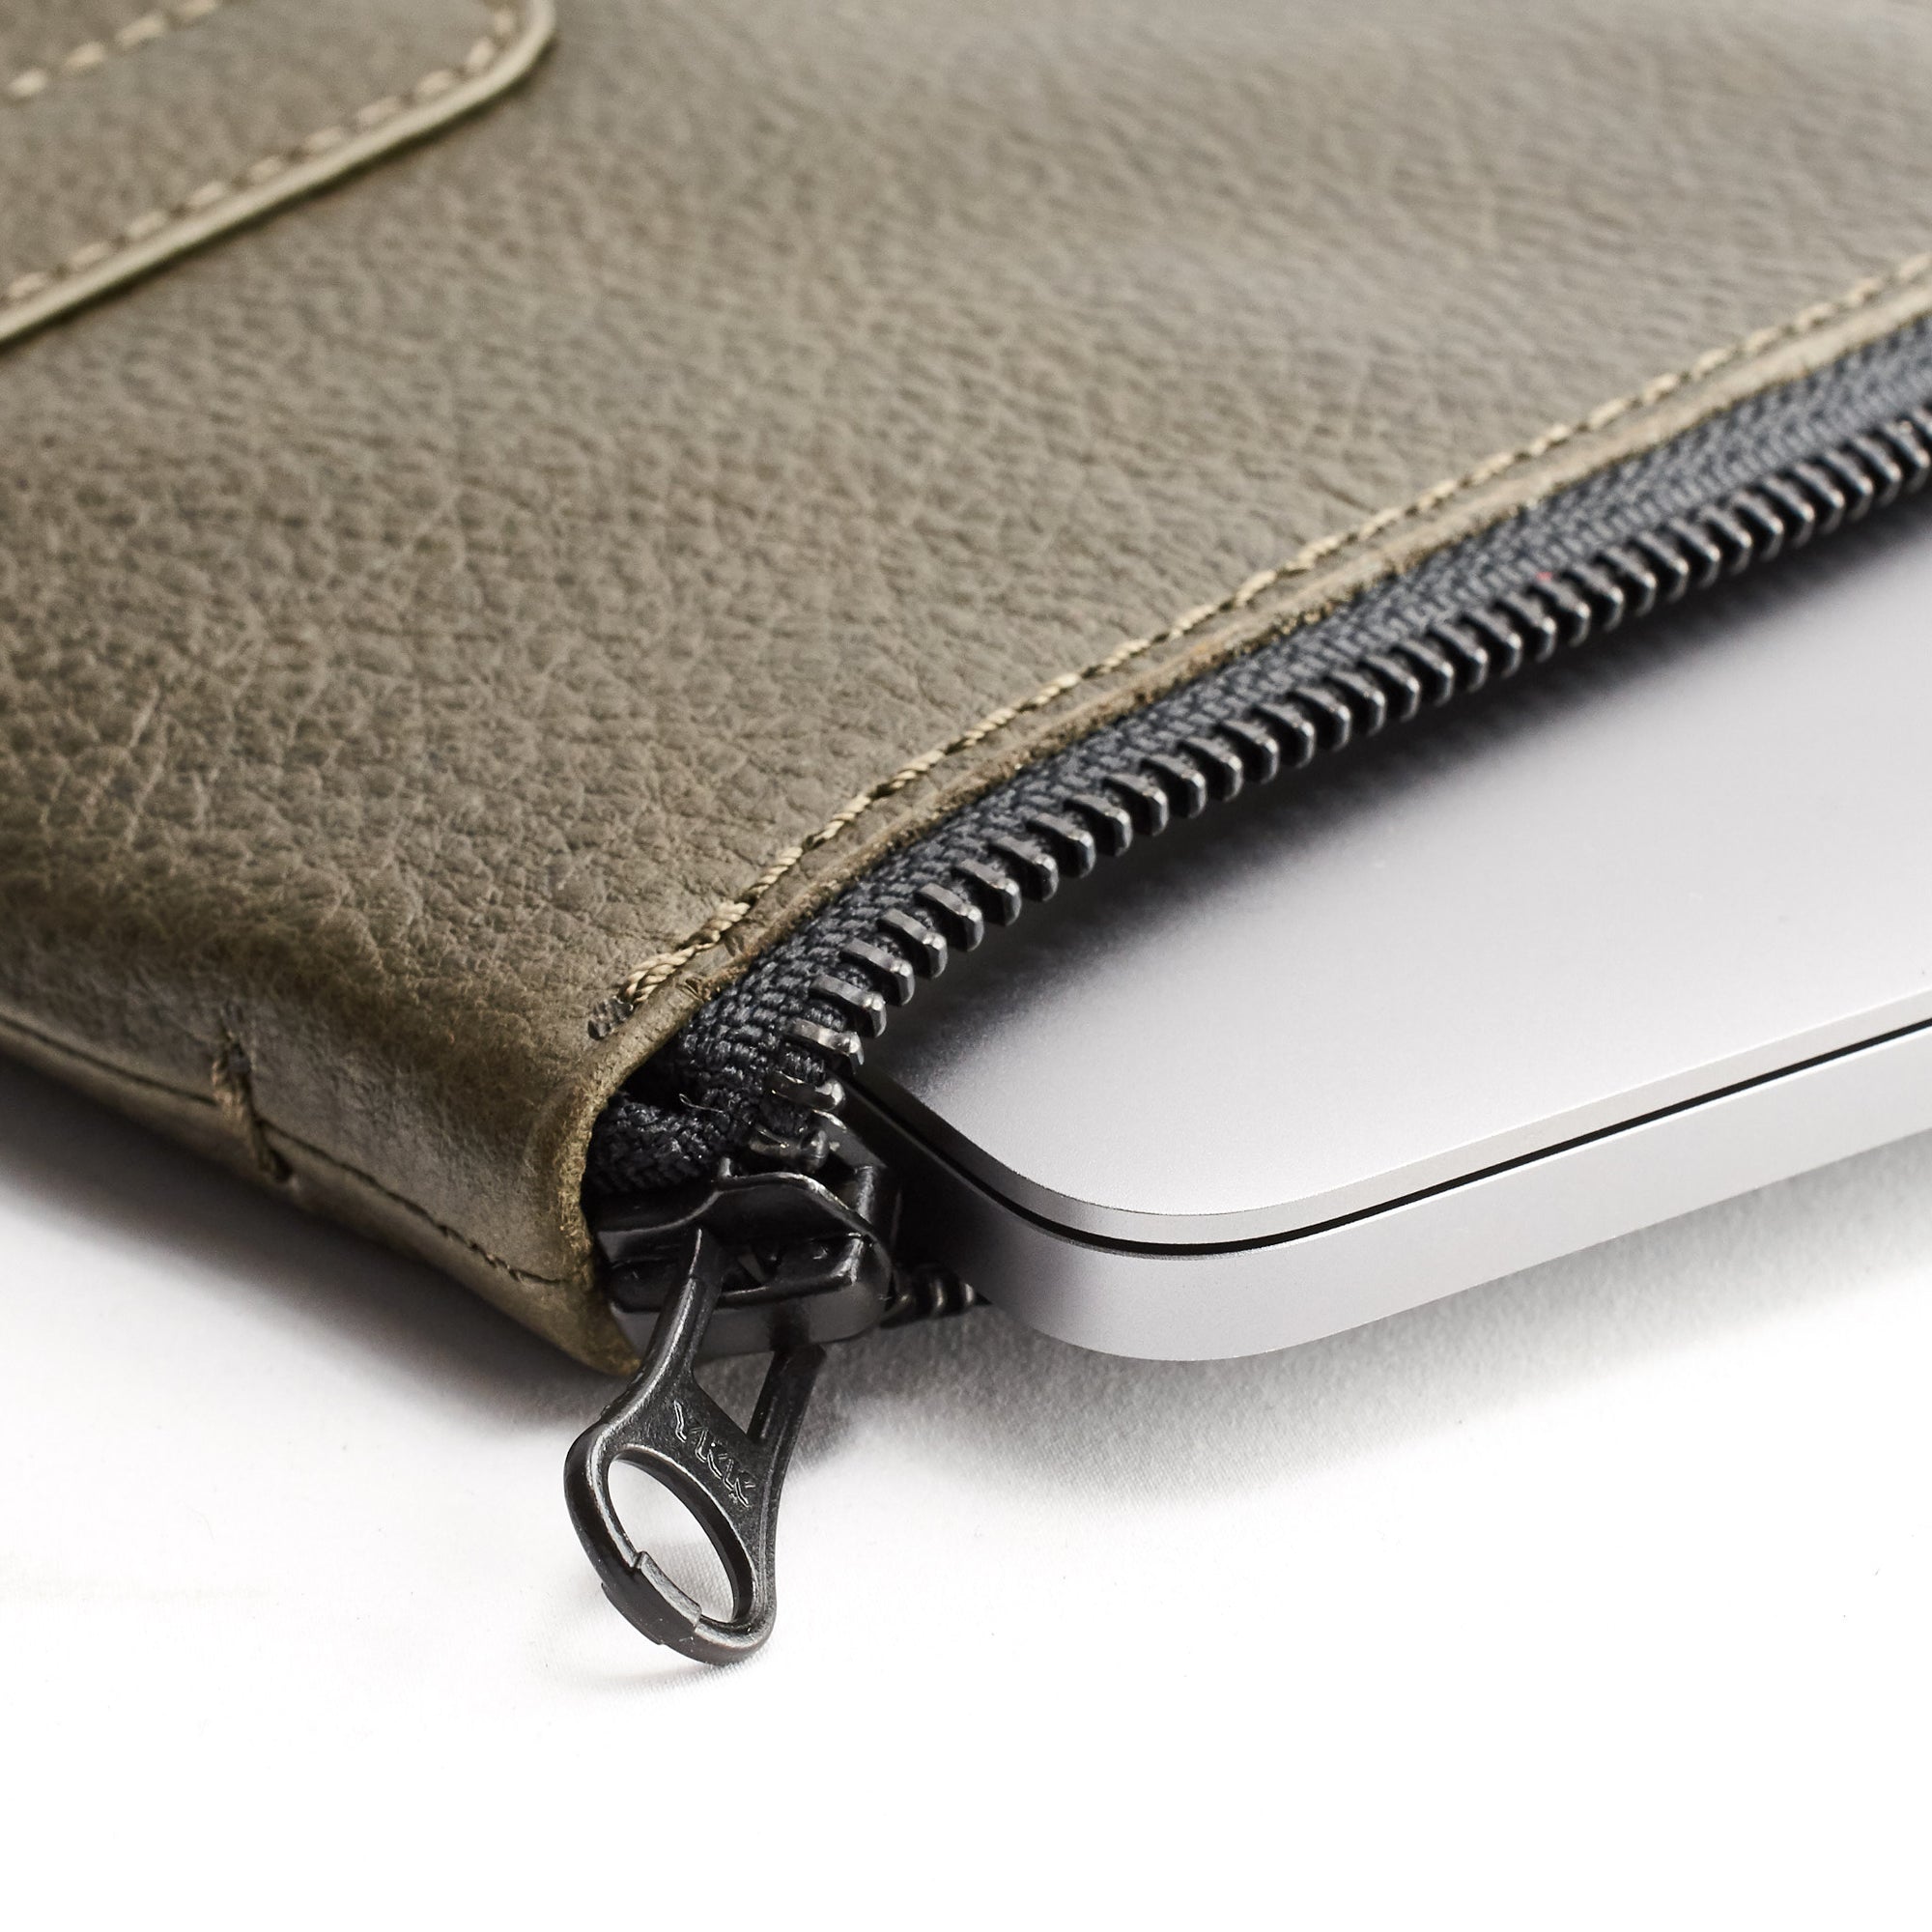 YKK black metallic zippers. Green Leather Laptop Portfolio Case. Laptops & devices Bag.